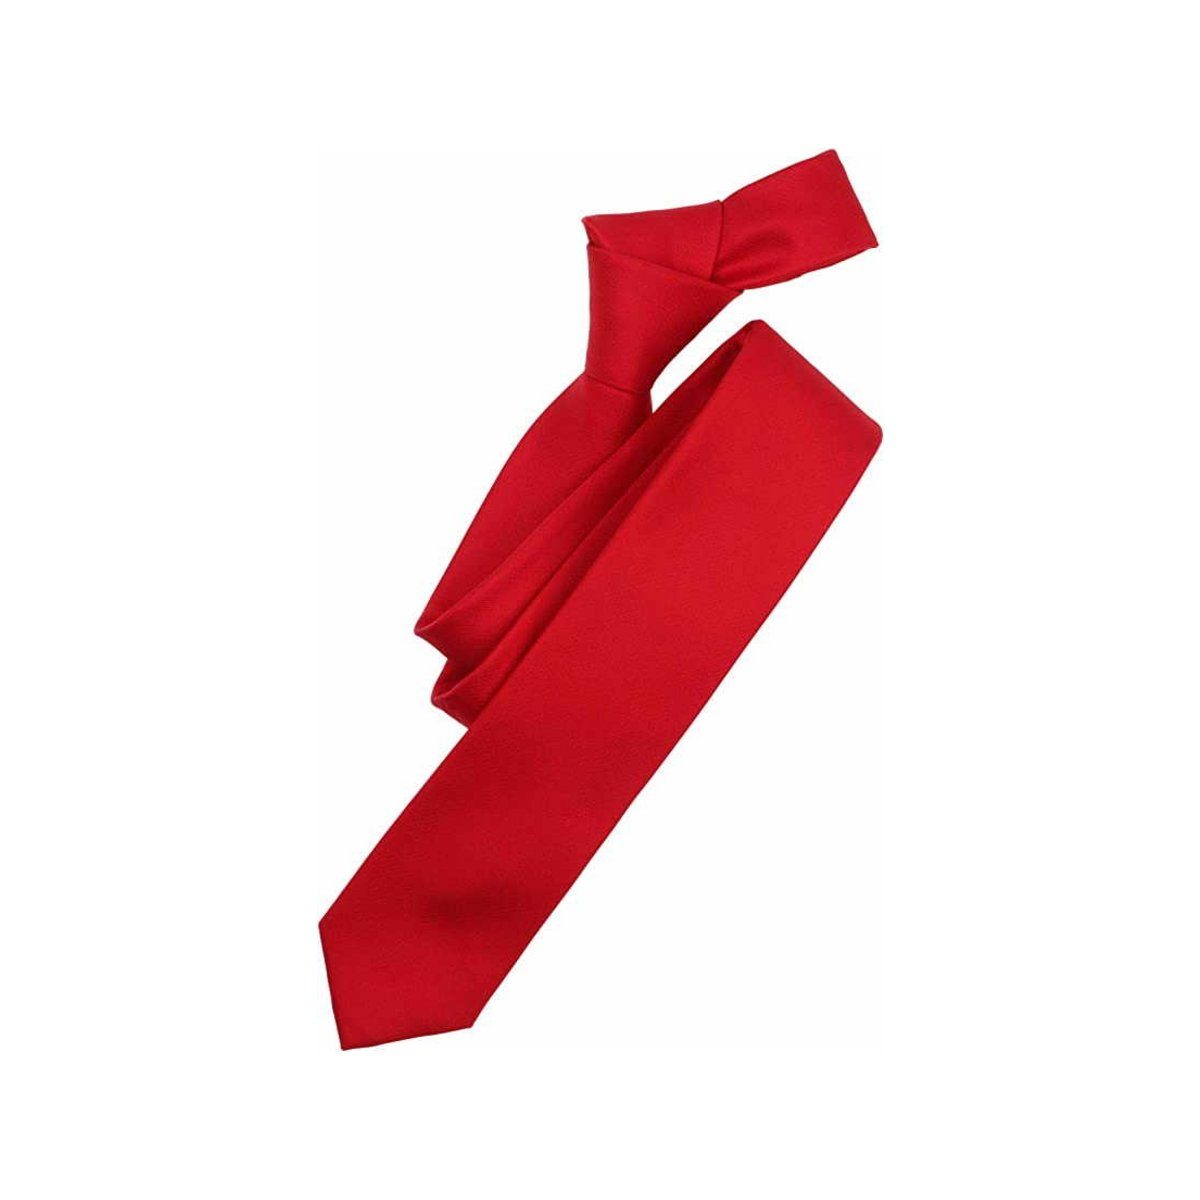 (1-St) rot Rot VENTI Krawatte sattes